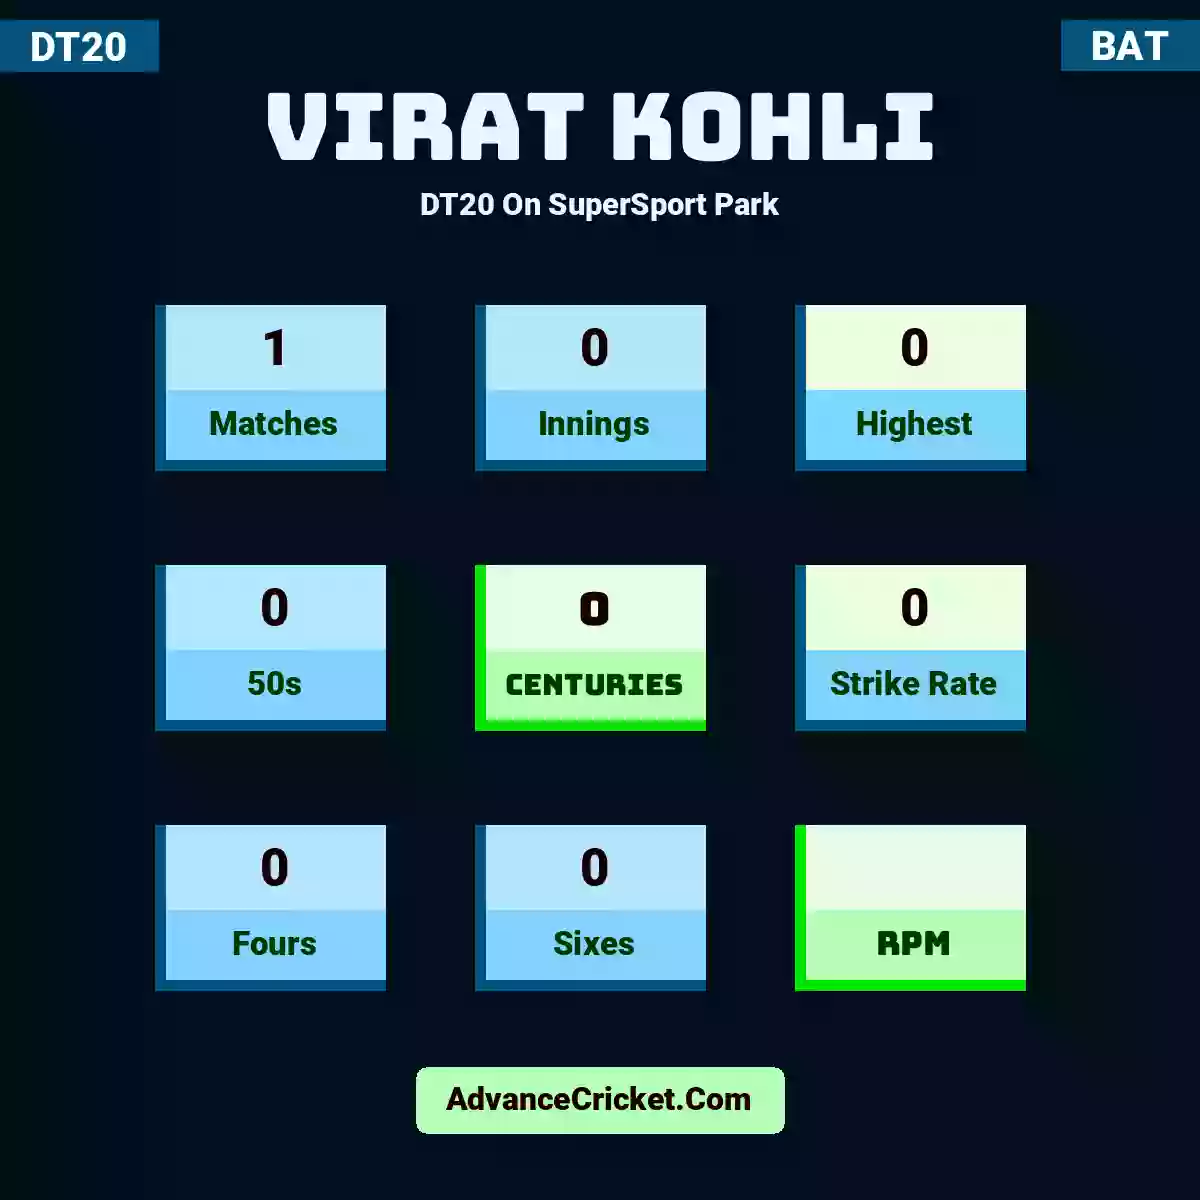 Virat Kohli DT20  On SuperSport Park, Virat Kohli played 1 matches, scored 0 runs as highest, 0 half-centuries, and 0 centuries, with a strike rate of 0. V.Kohli hit 0 fours and 0 sixes.